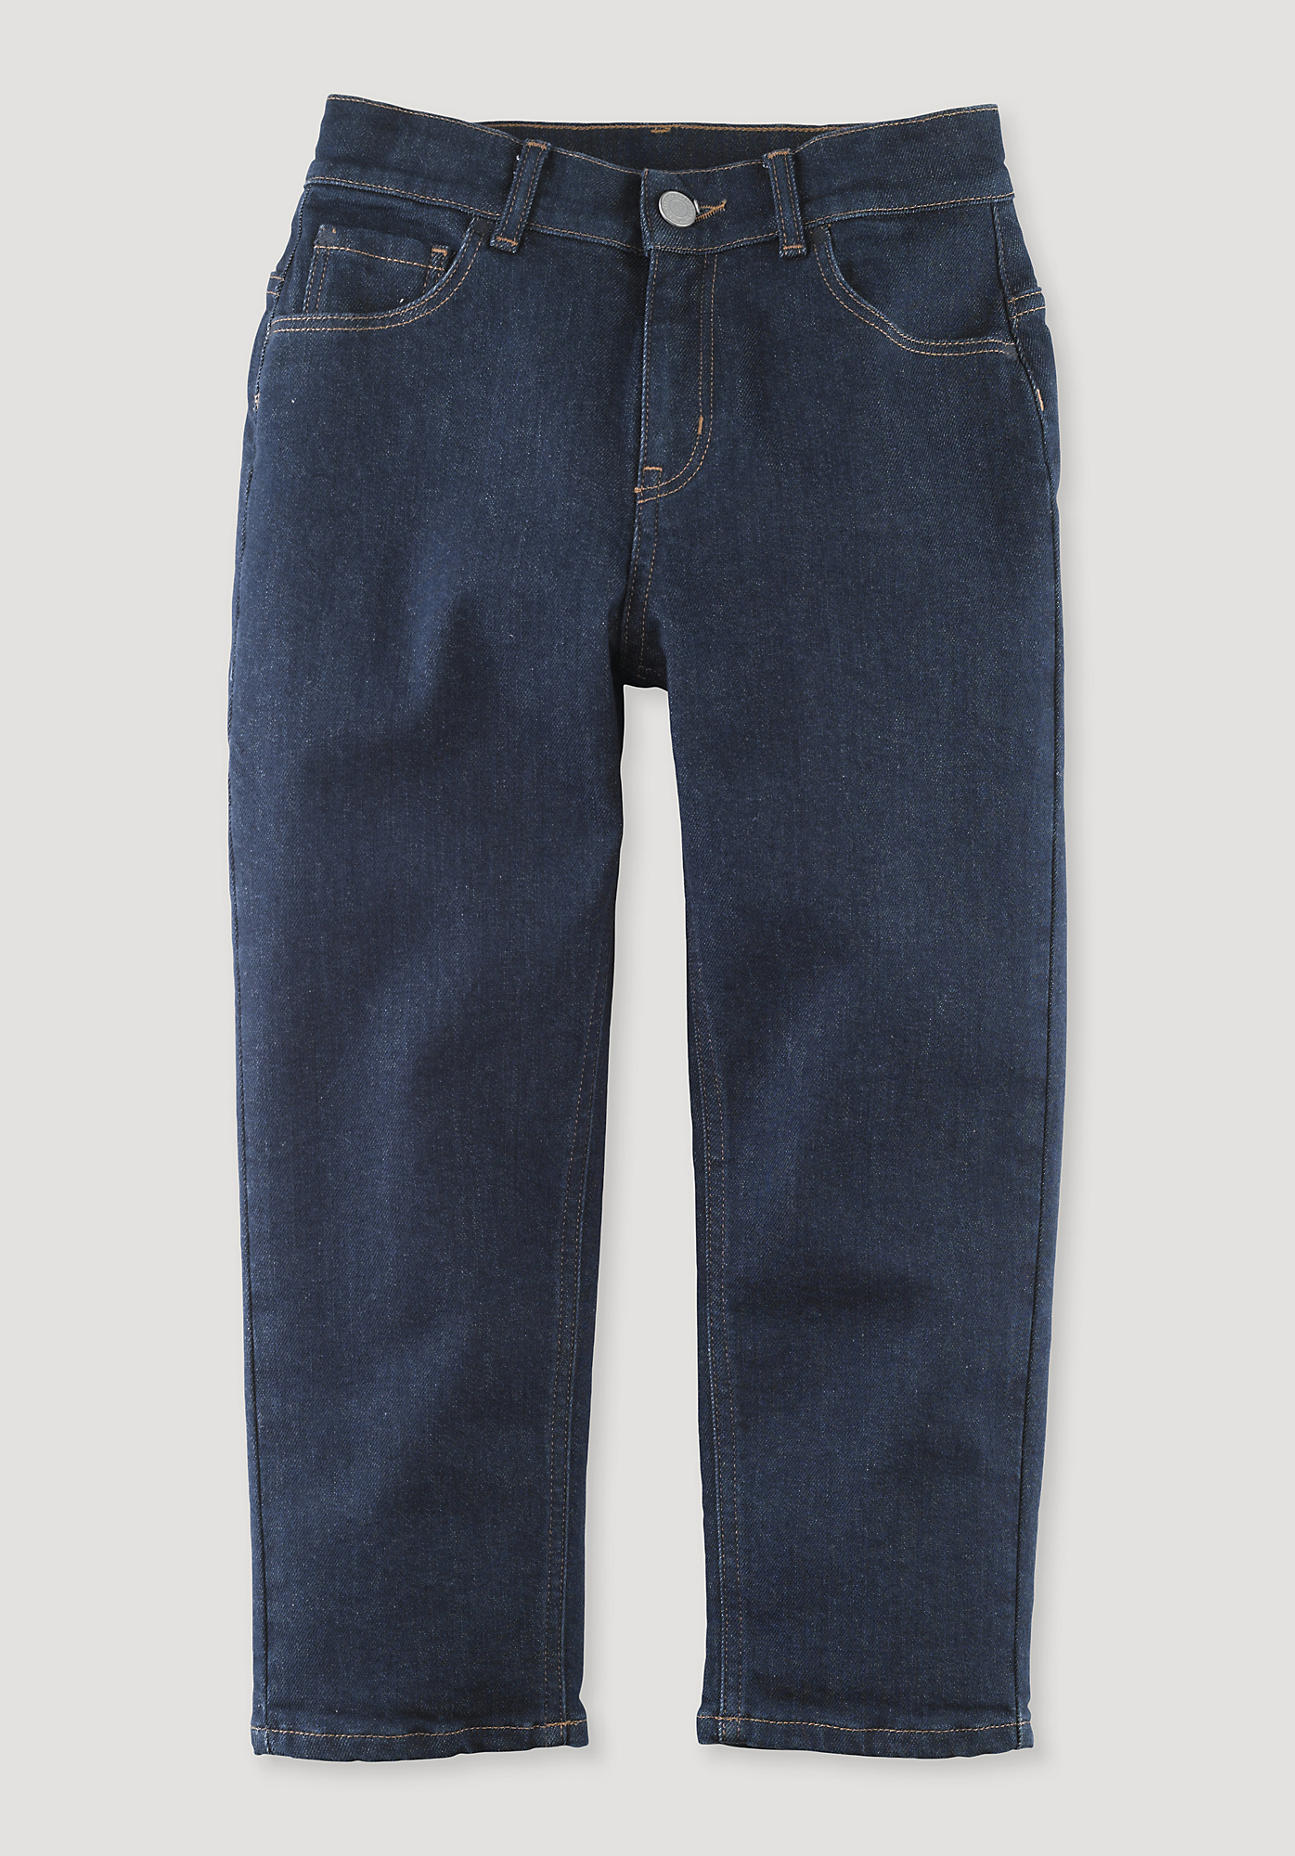 hessnatur Kinder Jeans aus COREVA™ Bio-Denim - blau Größe 98